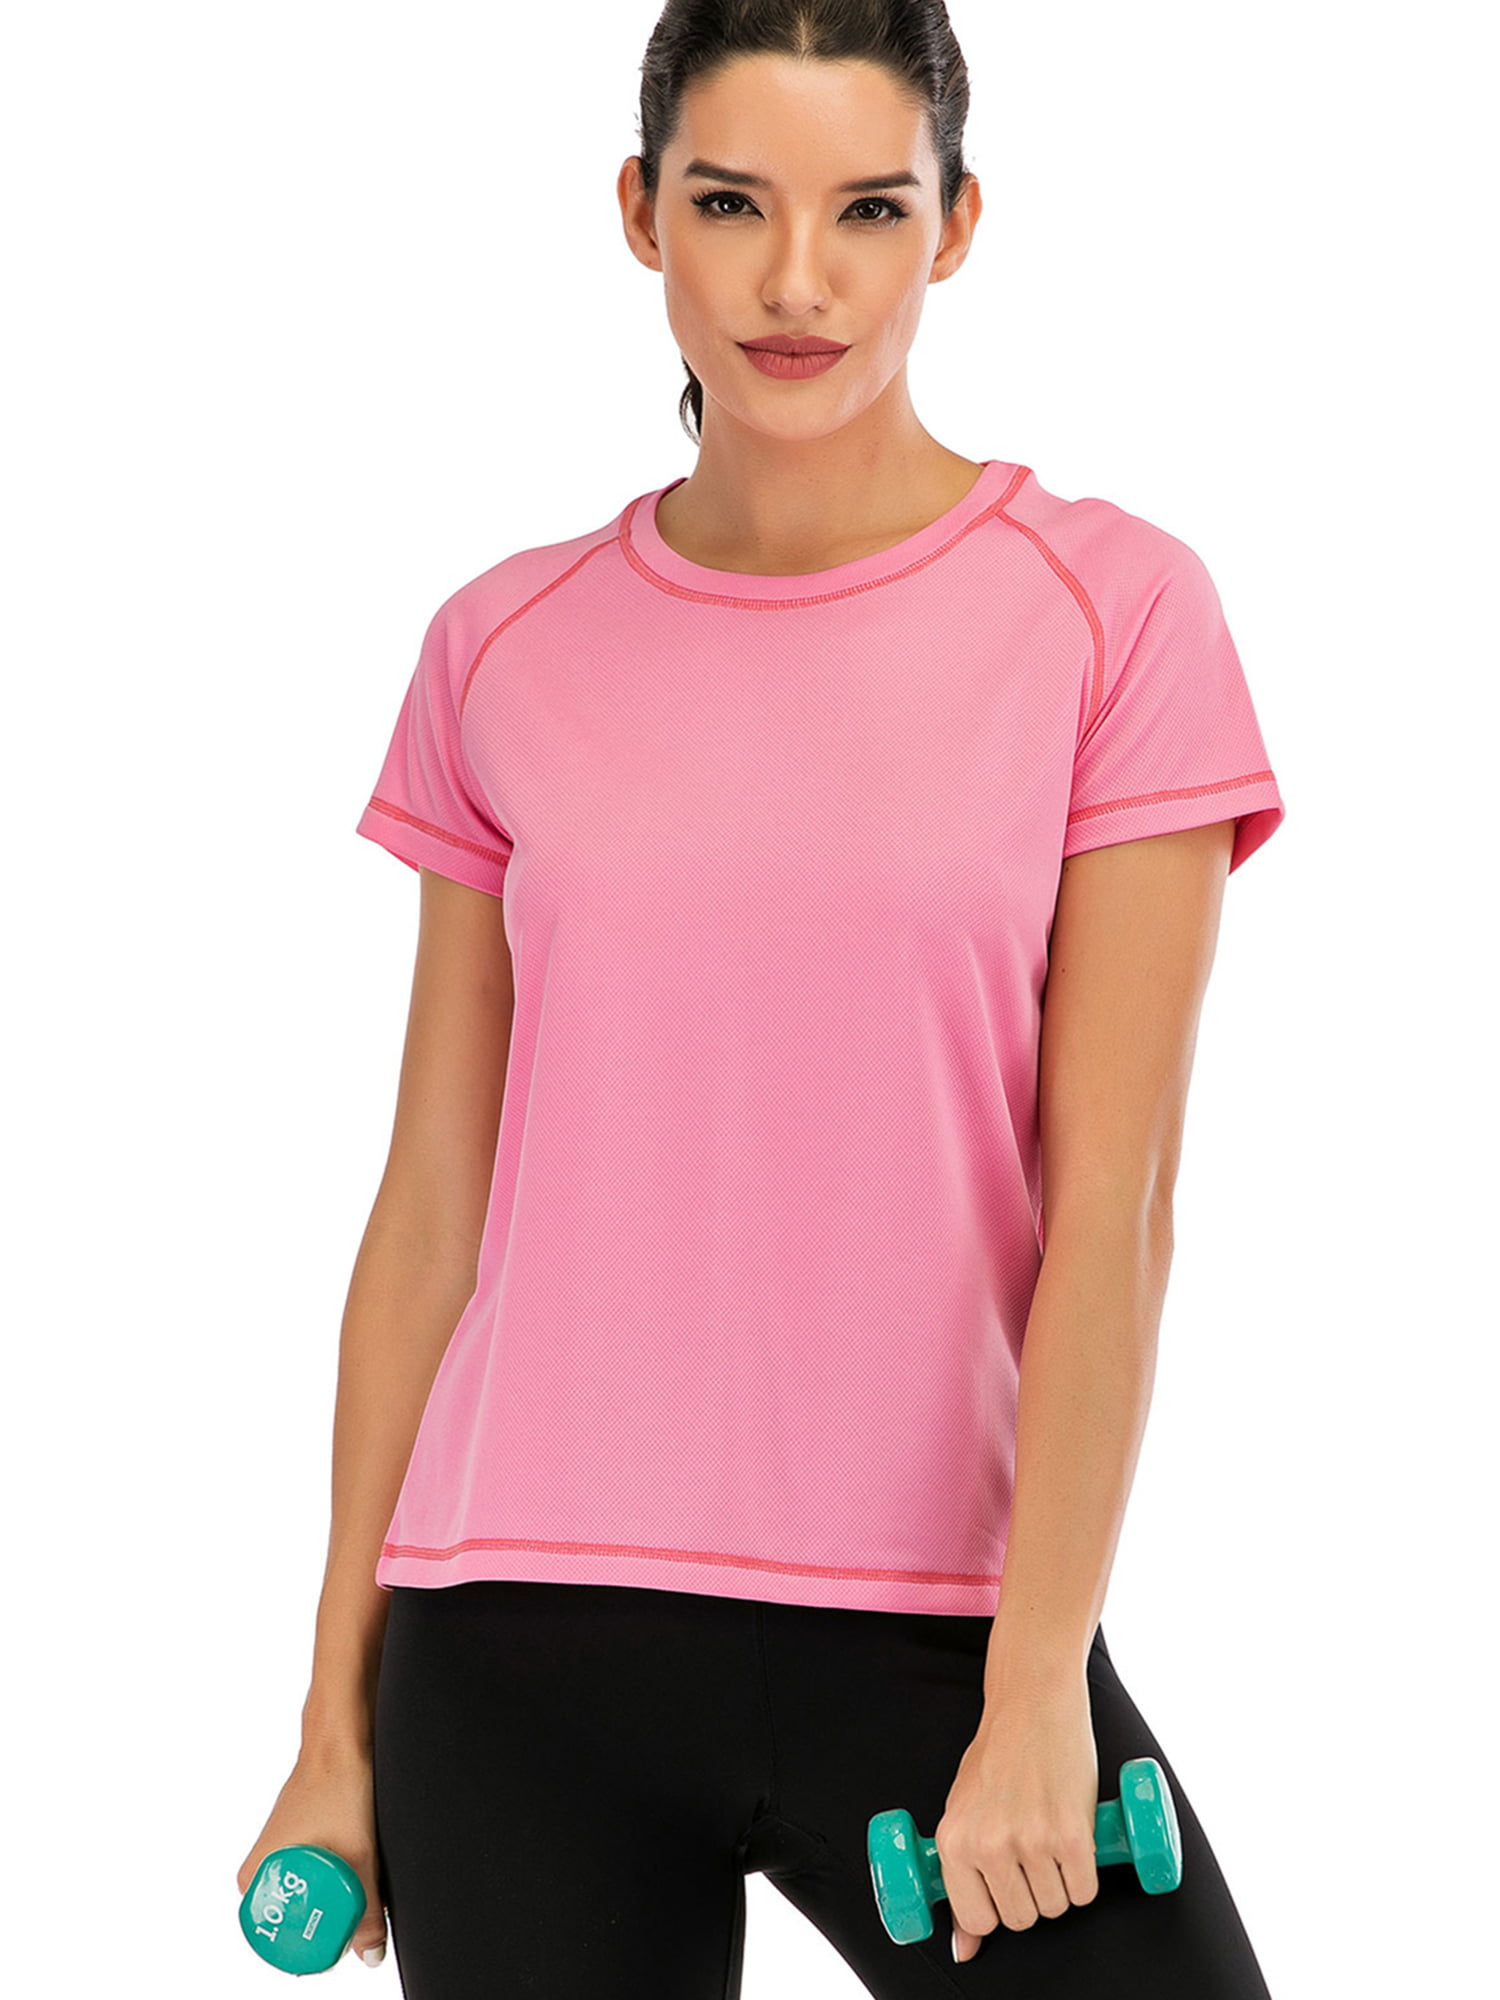 COOrun Women's Yoga Running T-Shirts Lightweight Quick Dry Tops Breathable Short Sleeve Gym Shirts S-XXL 